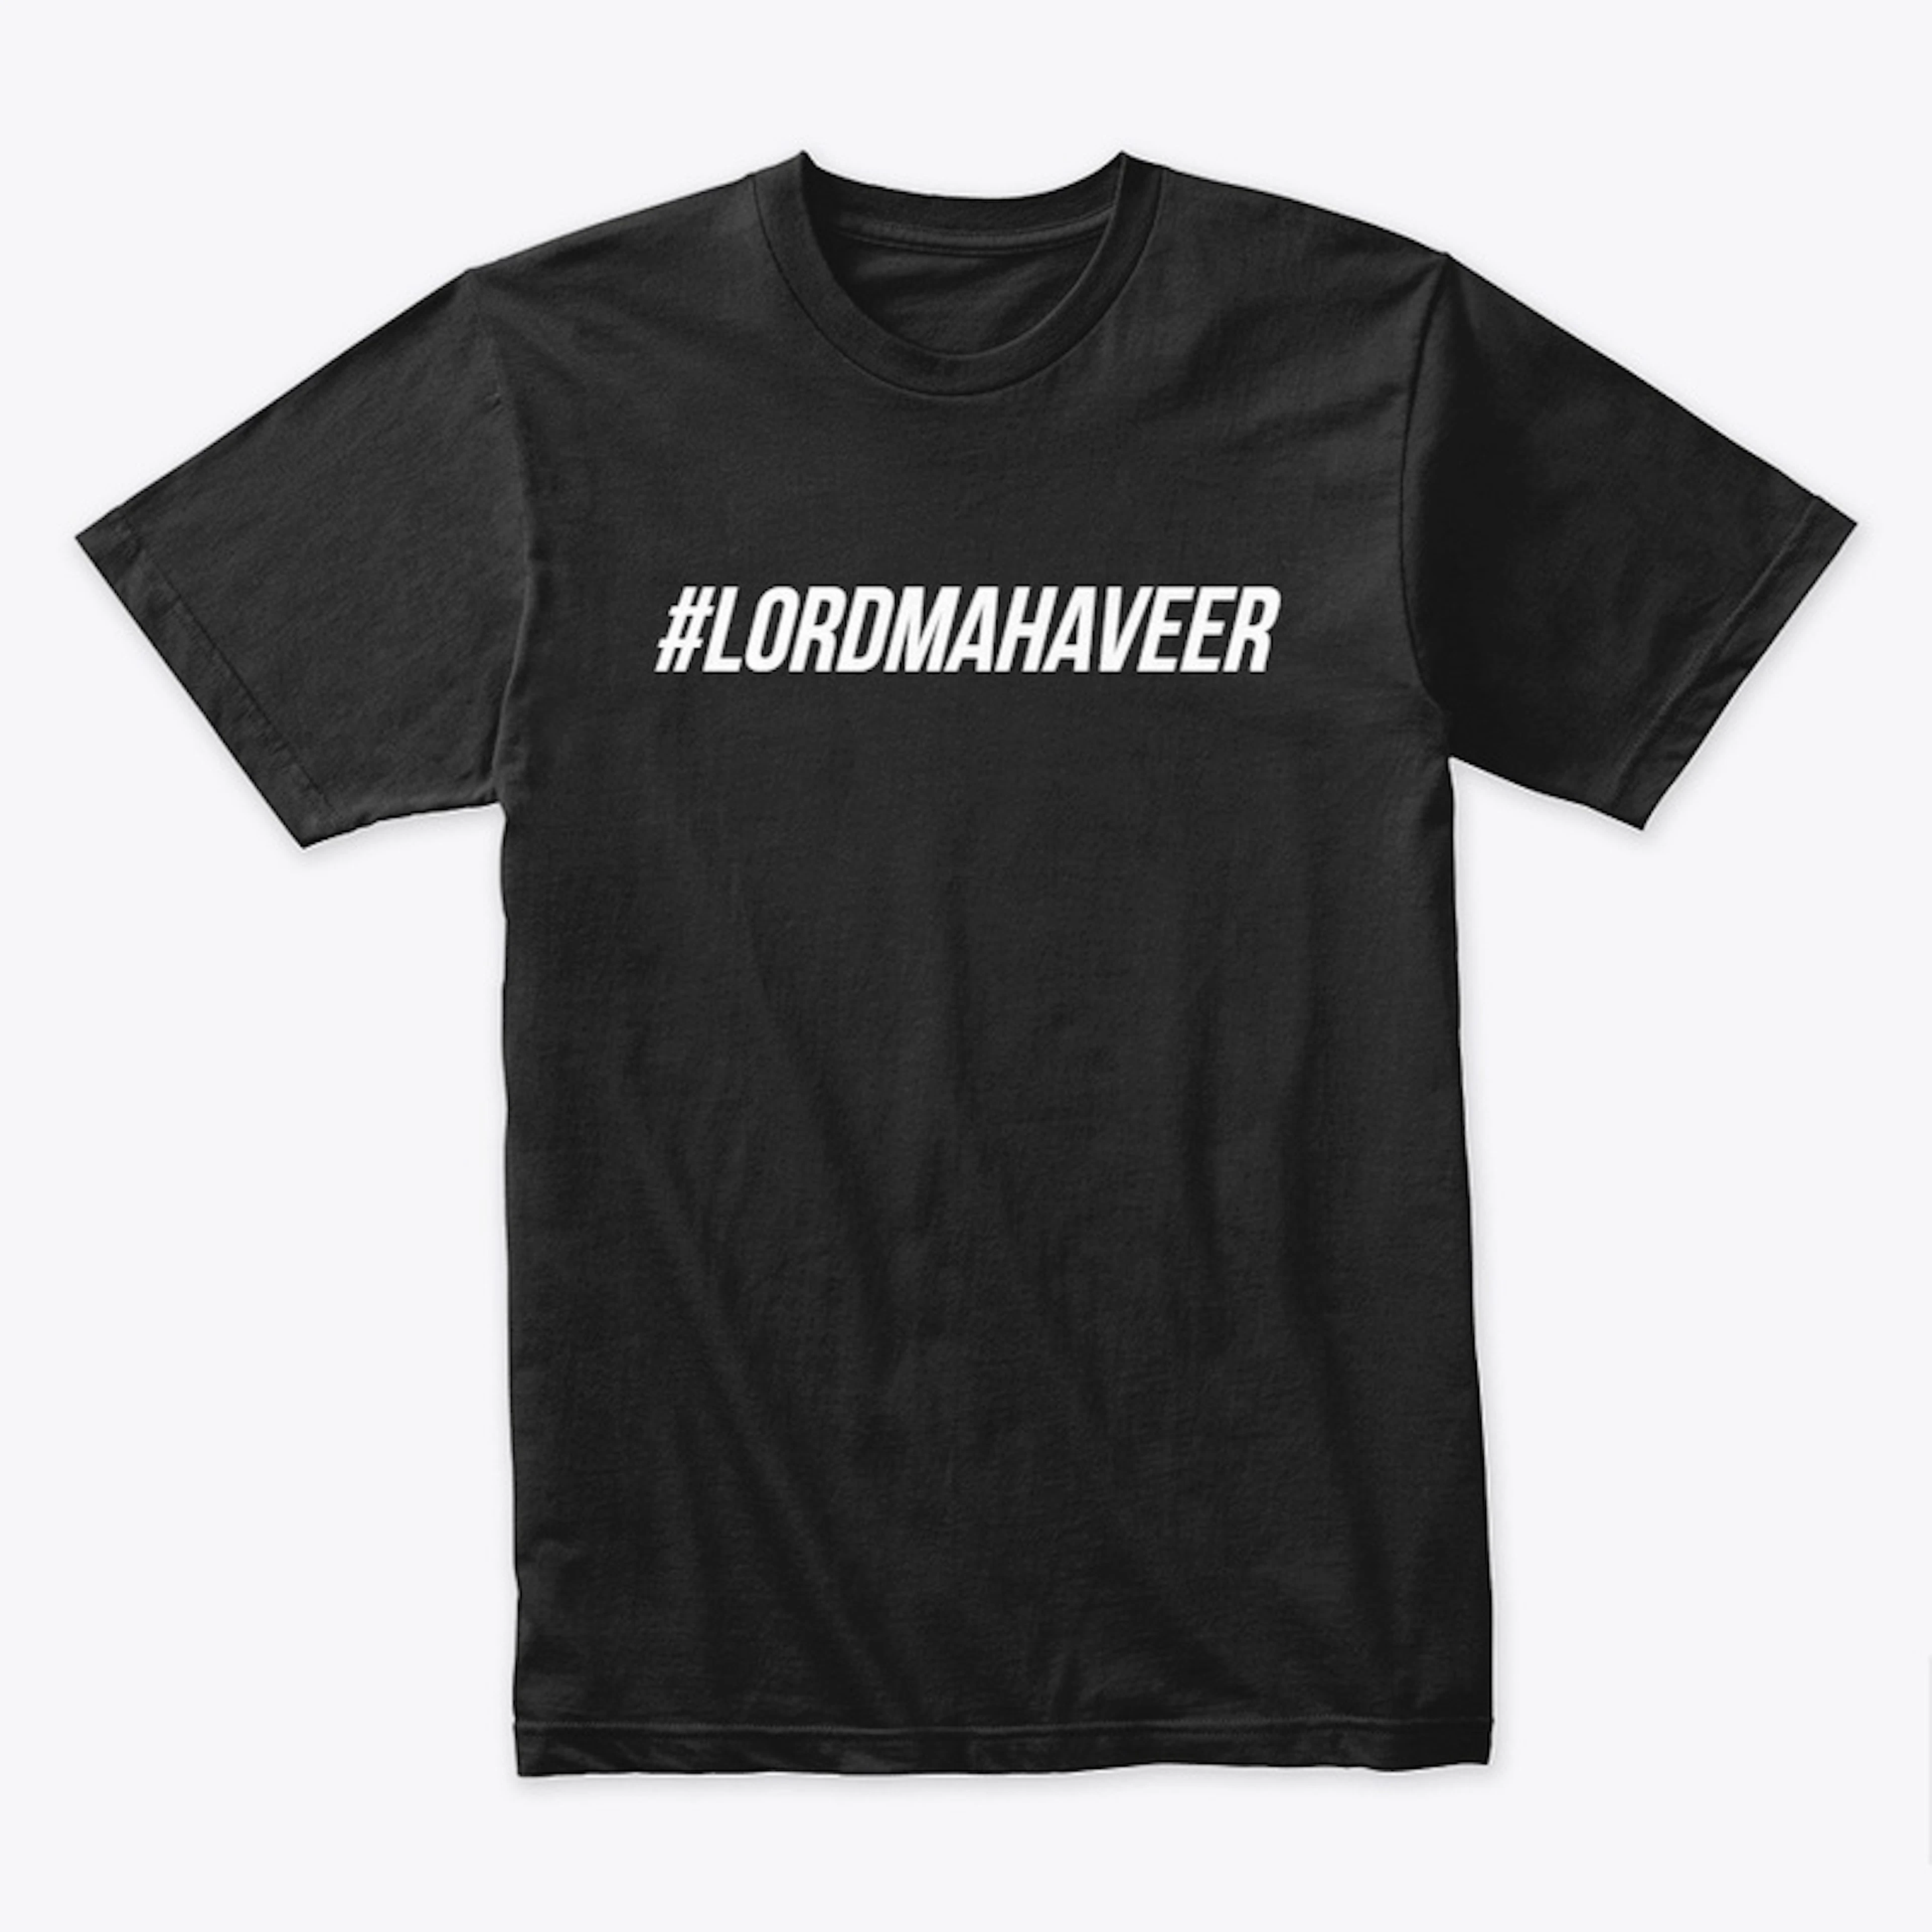 #LordMahaveer shirt